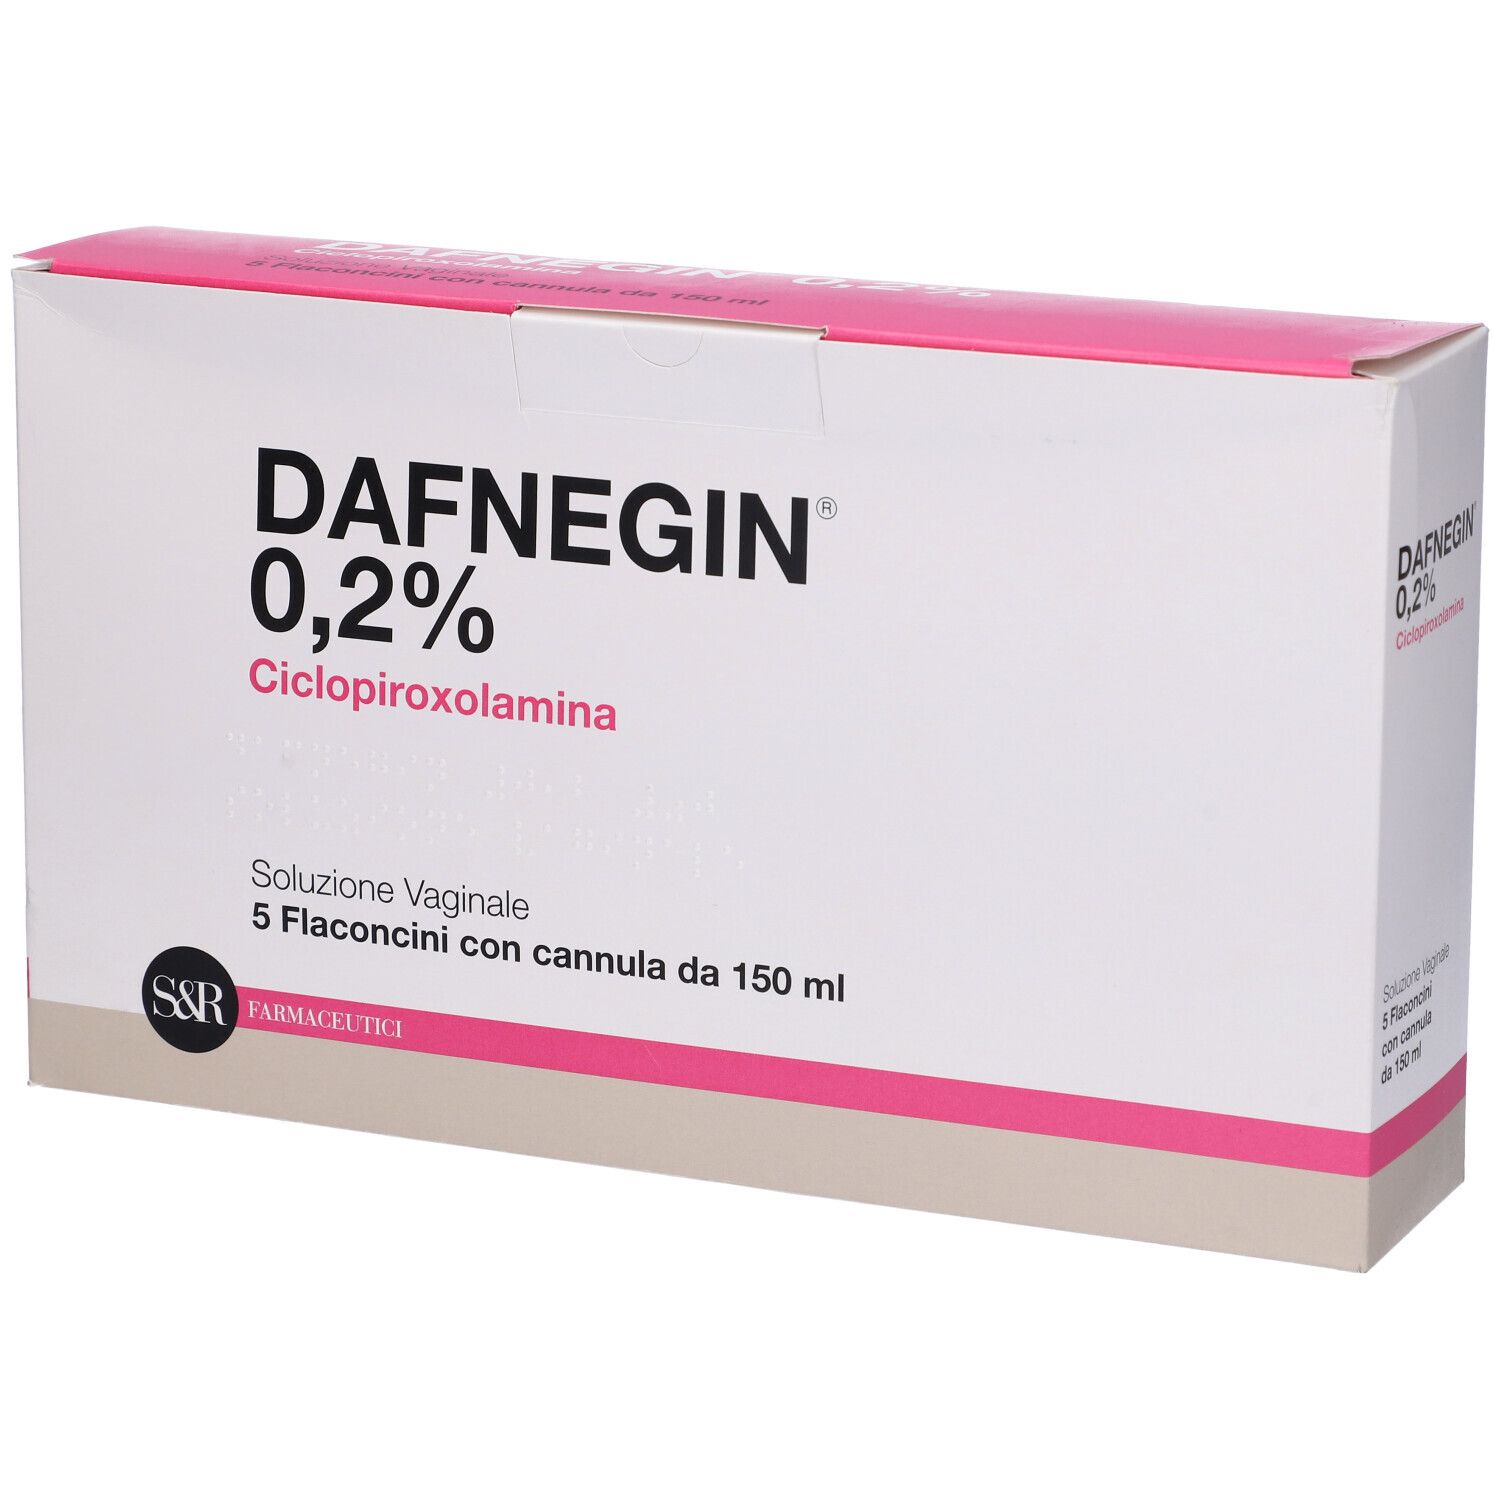 DAFNEGIN® 0,2% Soluzione Vaginale